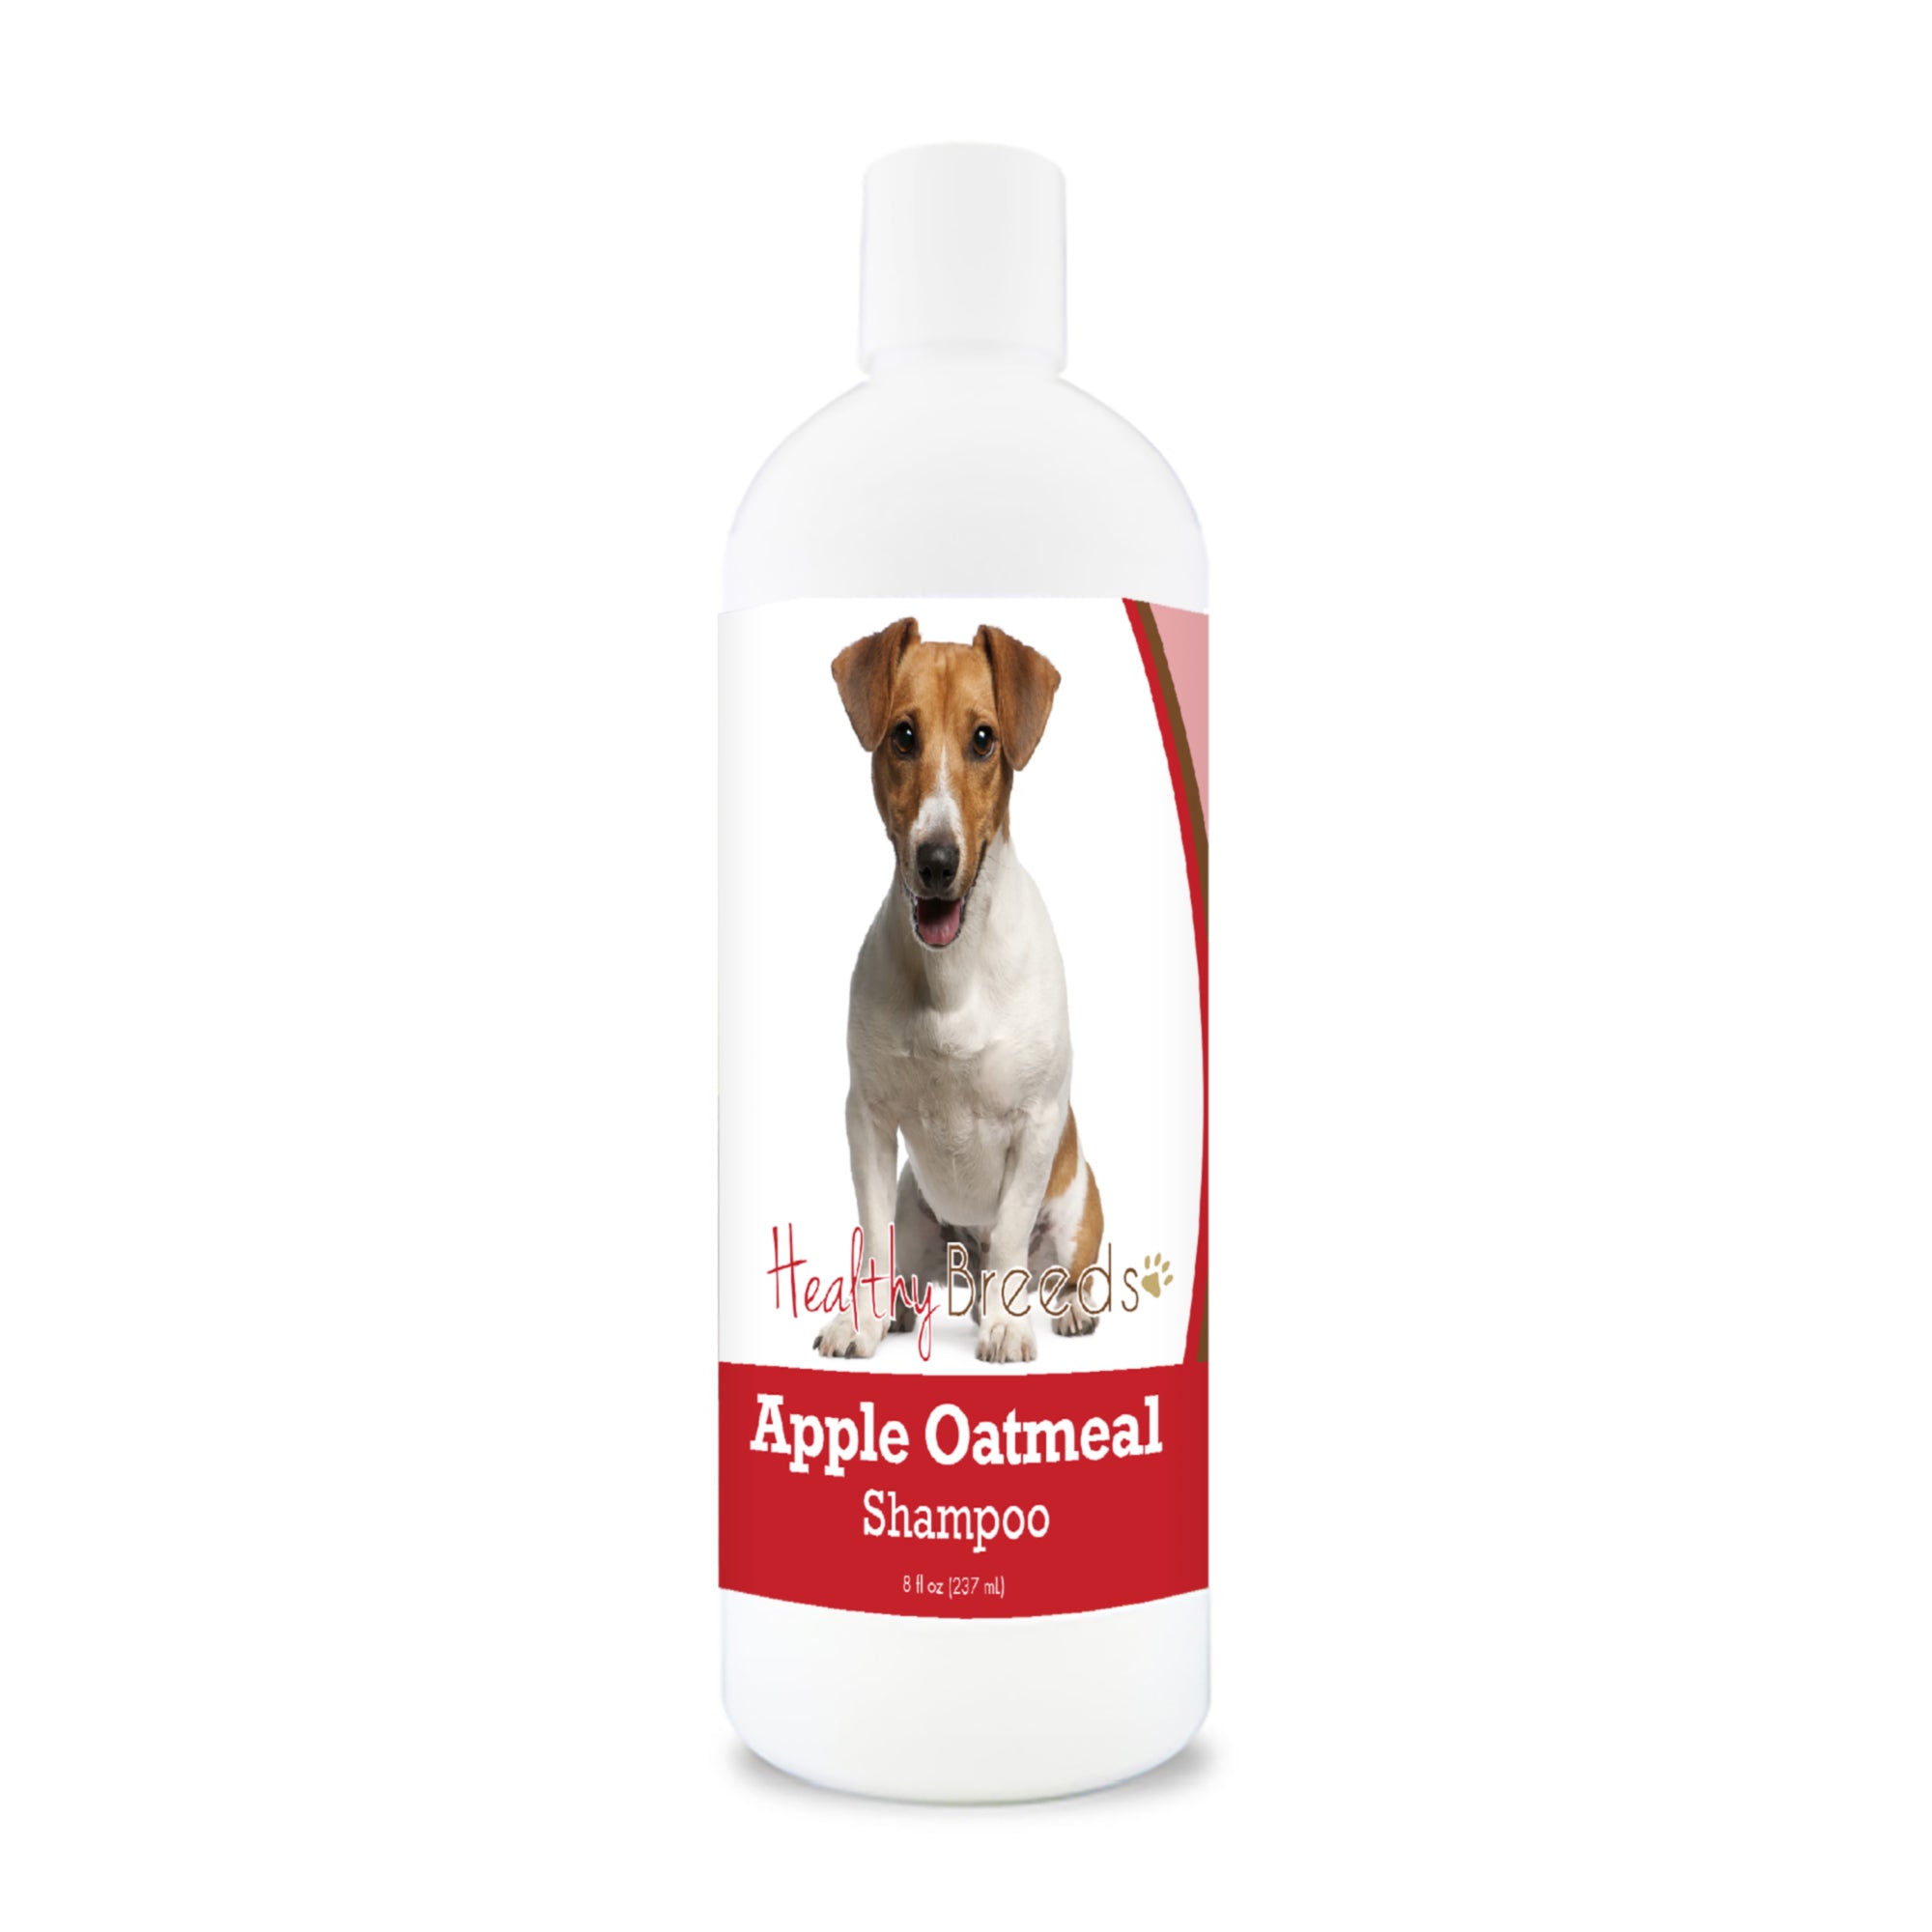 Jack Russell Terrier Apple Oatmeal Shampoo 8 oz